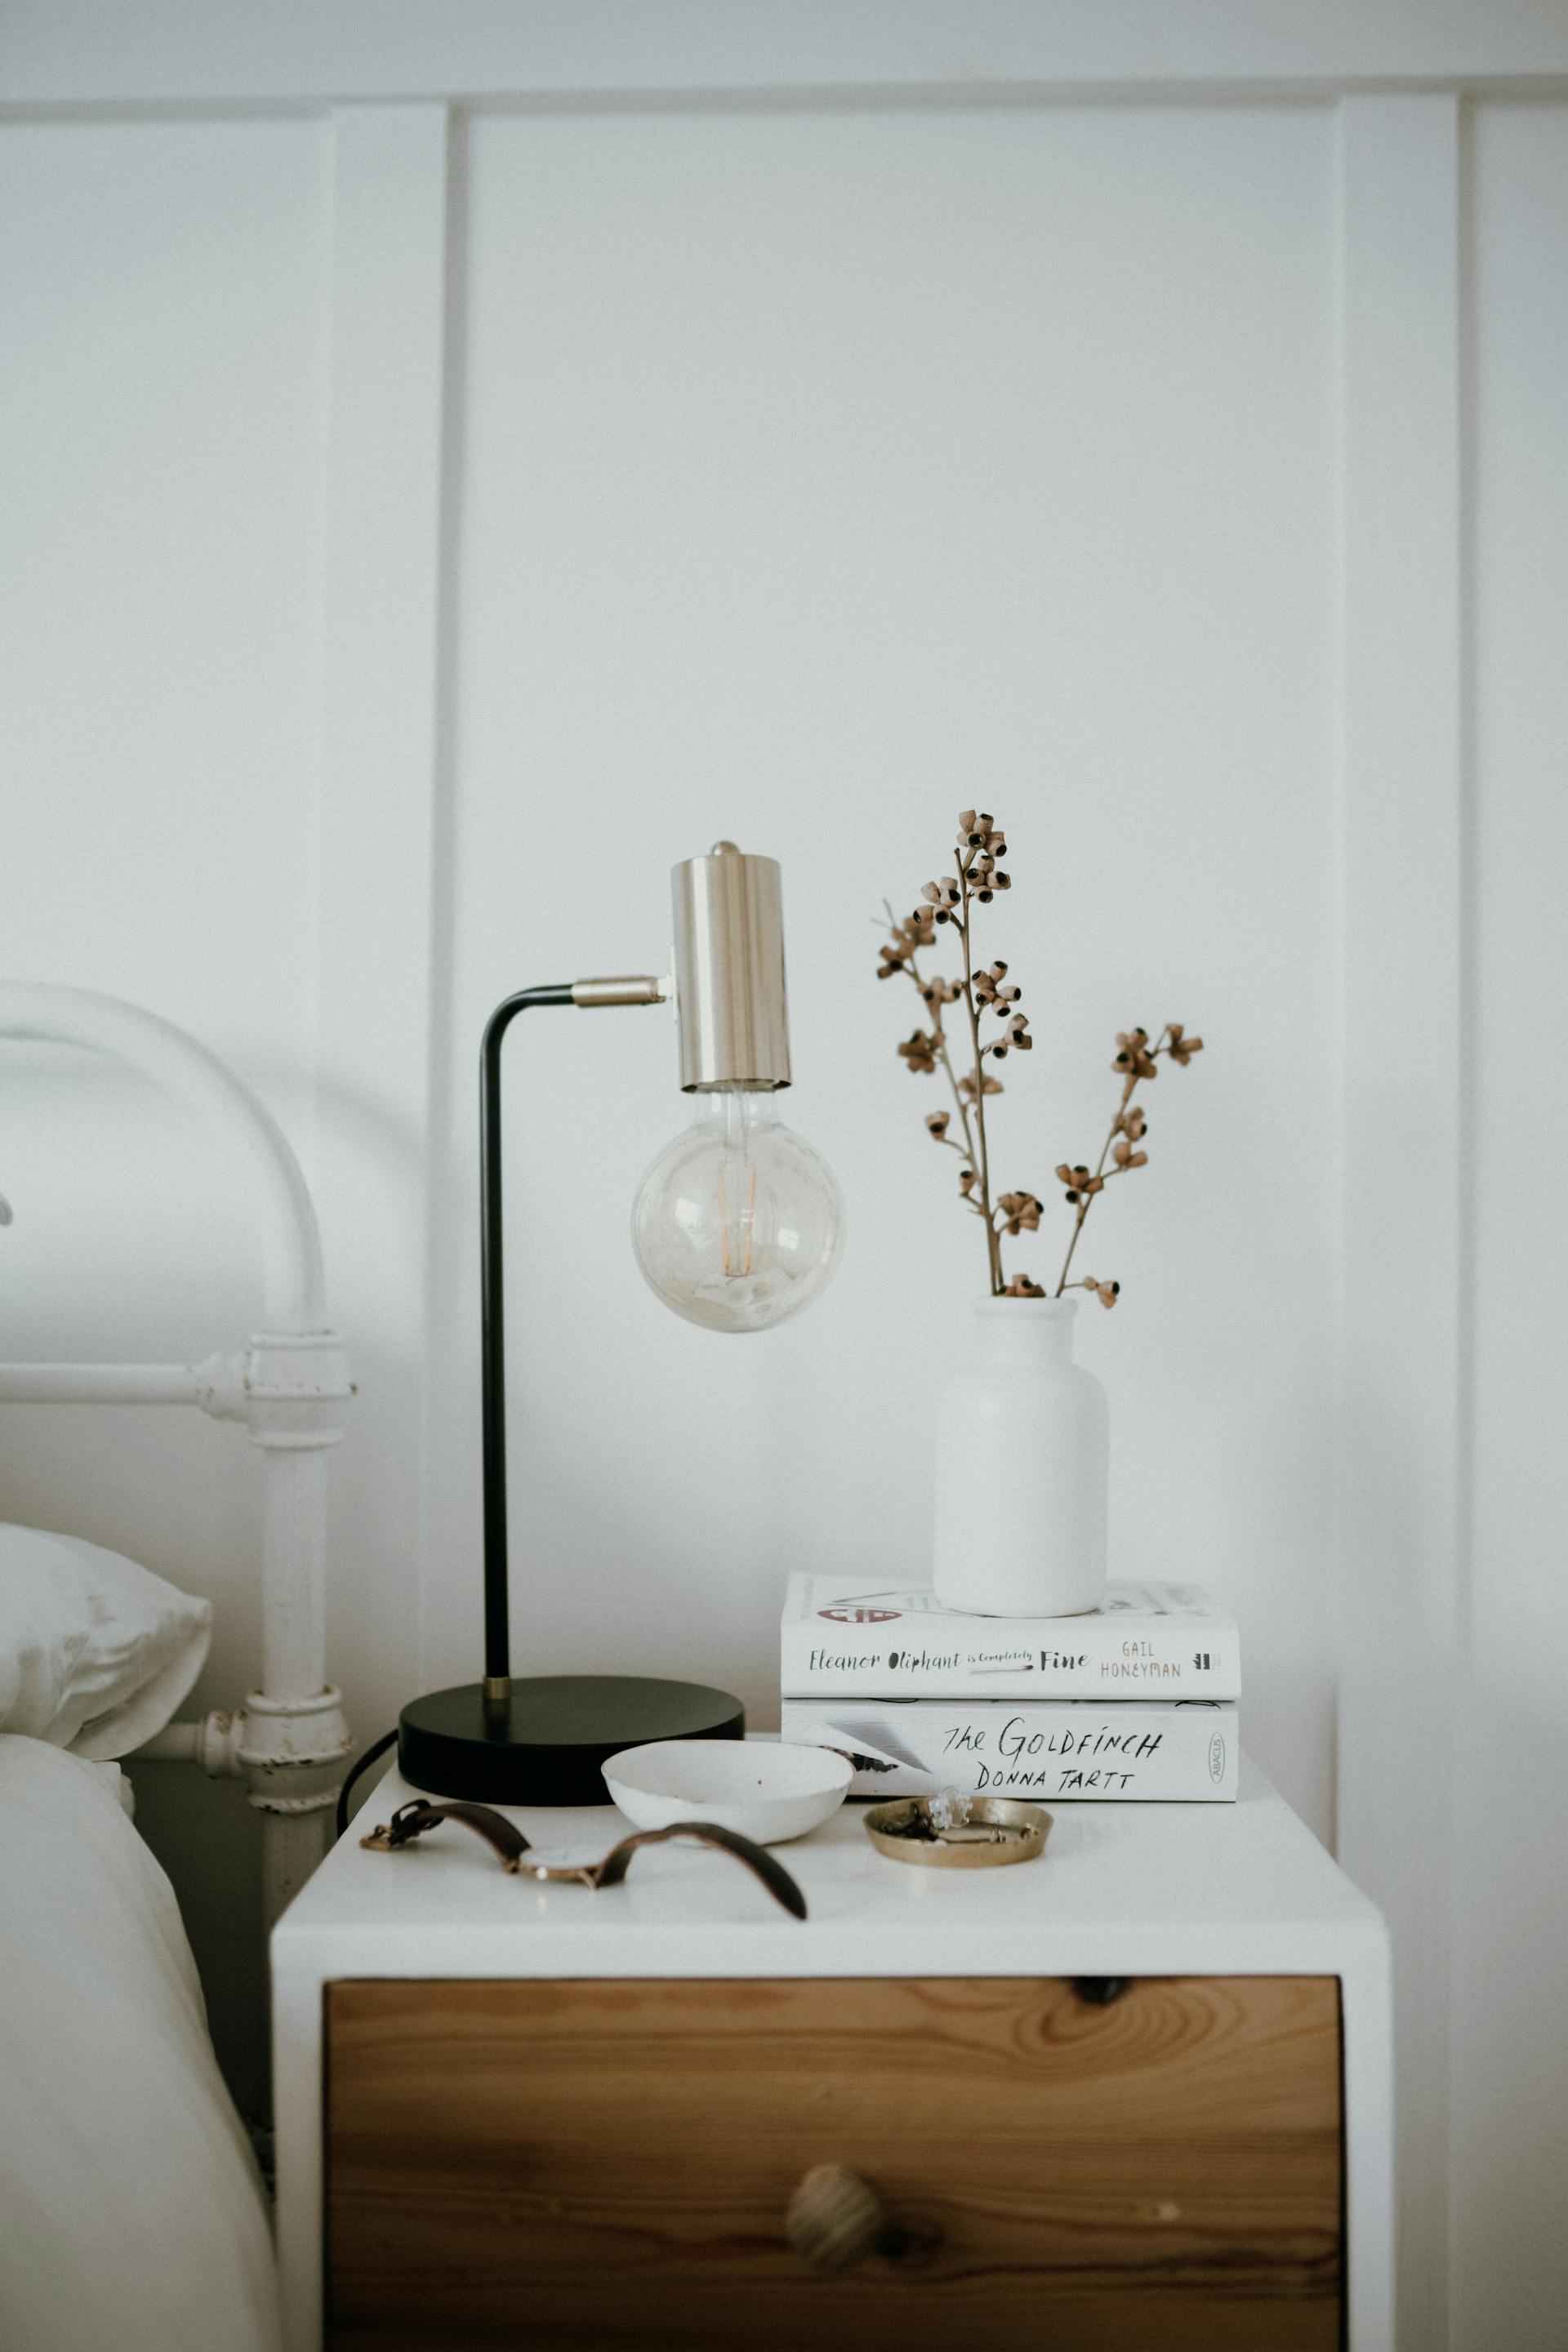 A white ceramic vase on a bedside table | Source: Pexels